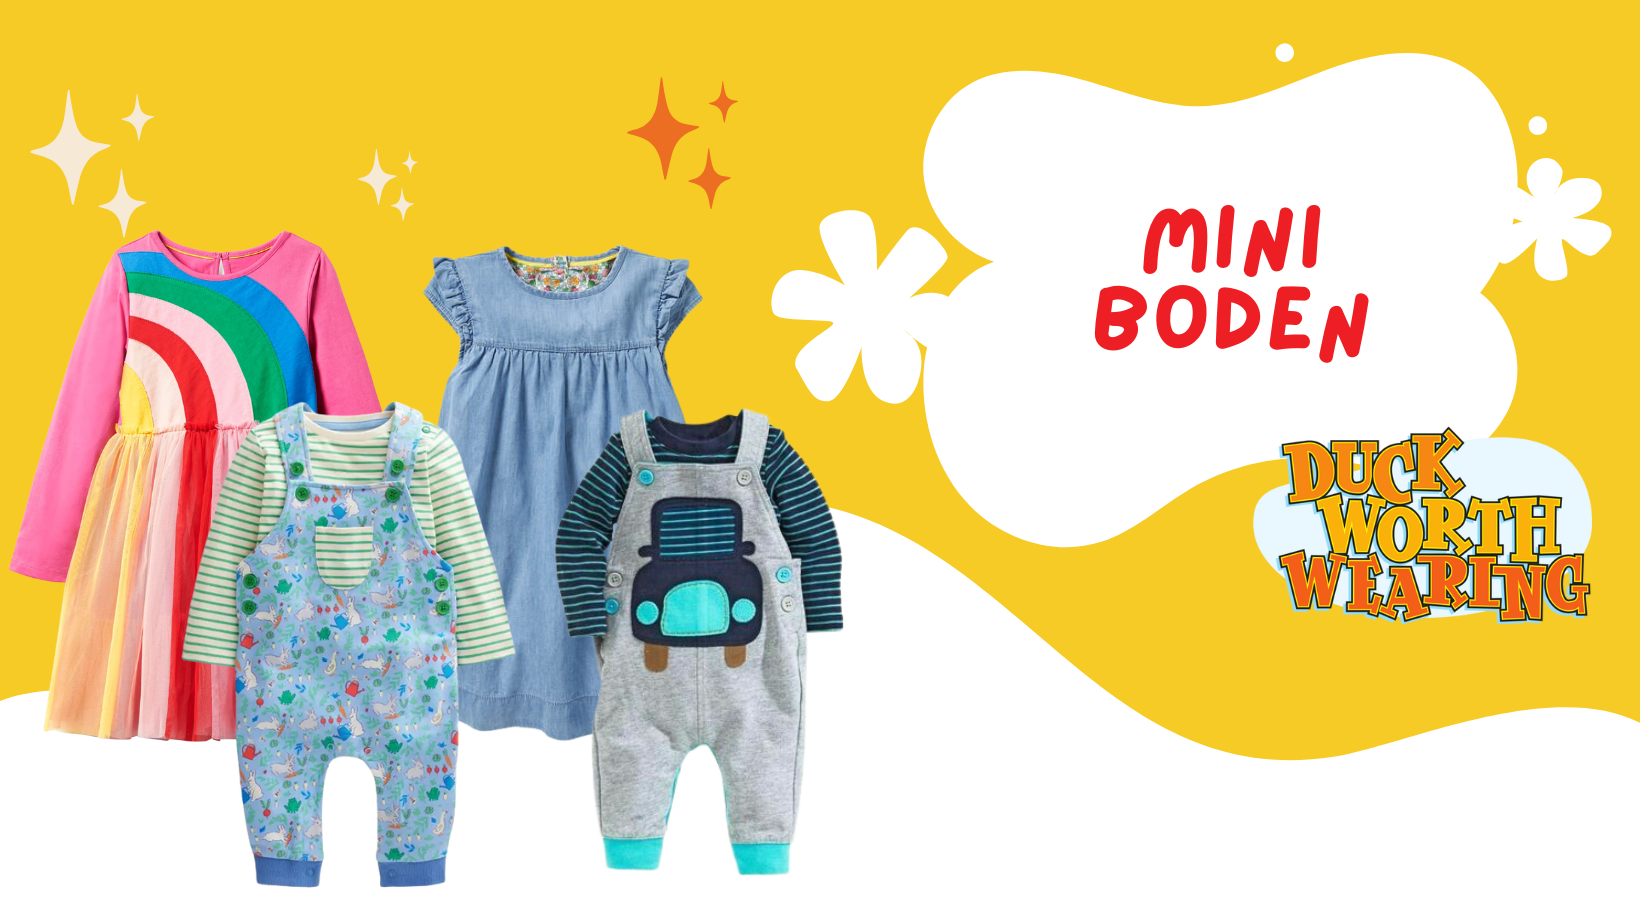 Mini Boden: Bringing Fun, Fashion, and Quality to Children's